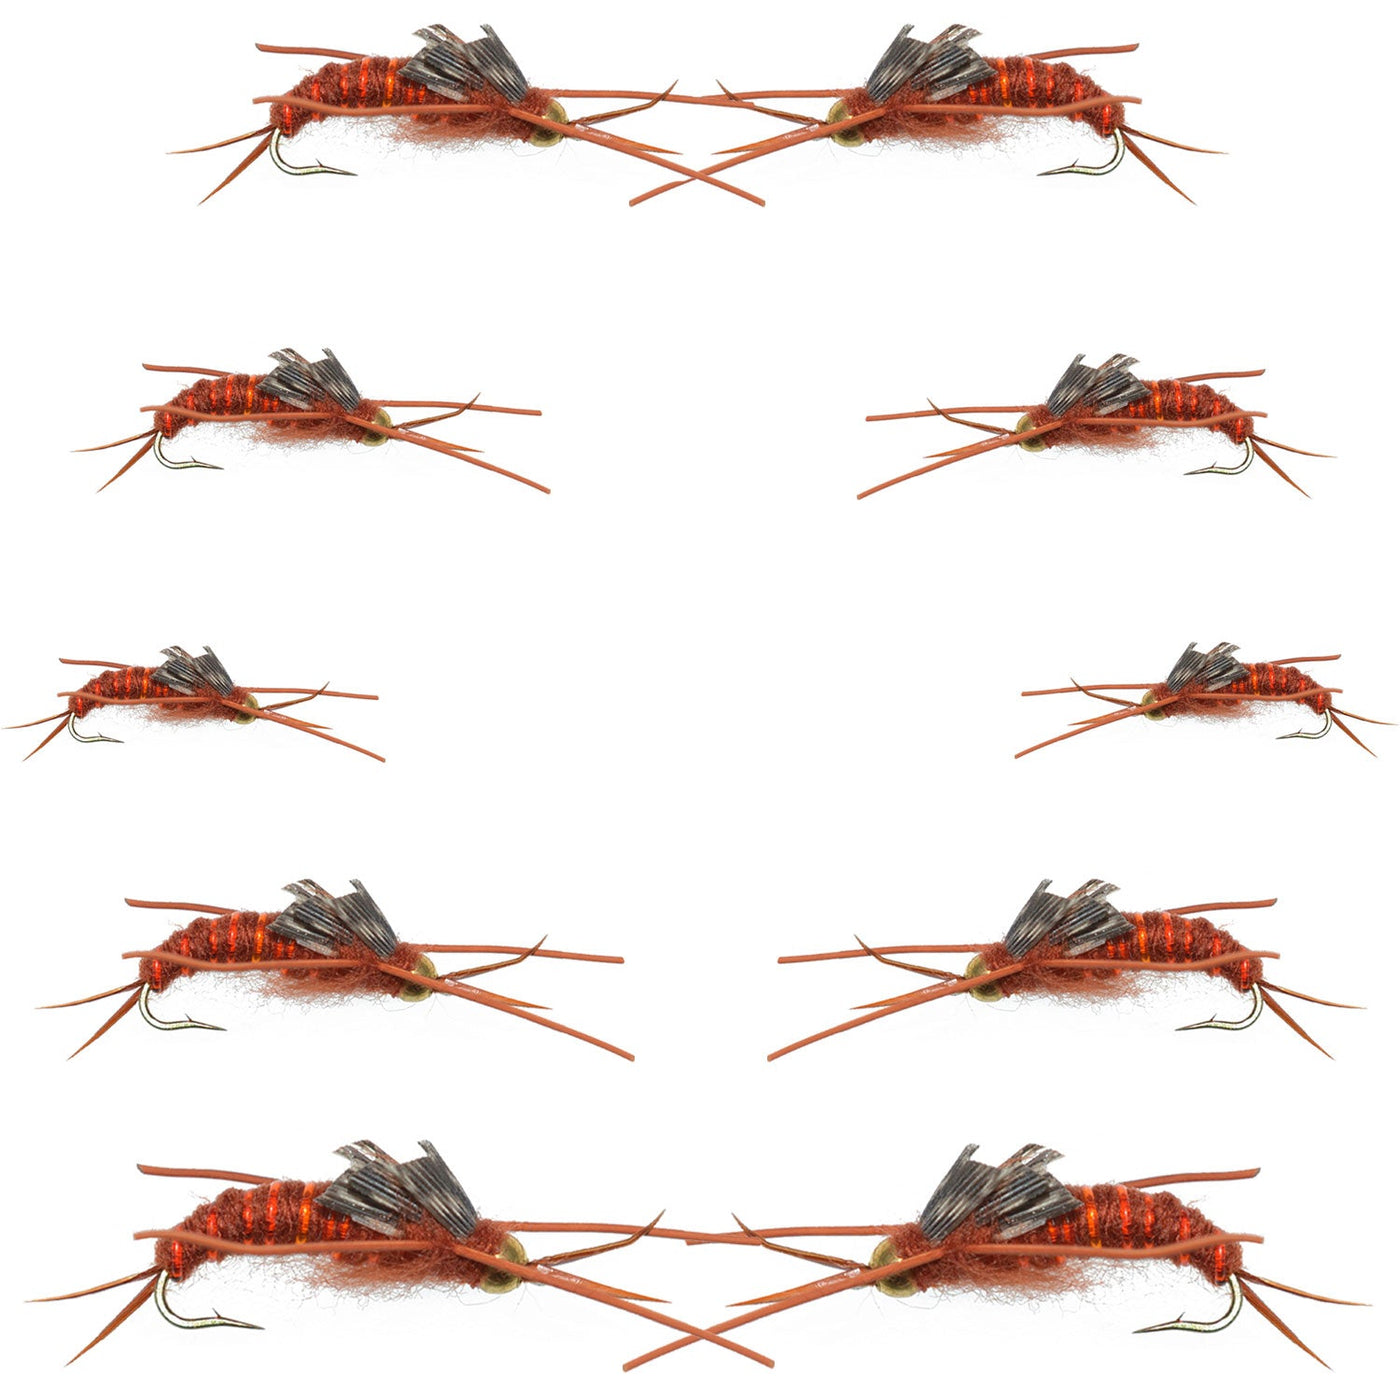 Basics Collection - Kaufmann's Brown Stonefly Nymph Assortment 10 Bead Head Rubber Legs Wet Flies - Hook Sizes 6, 8, 10, and 12